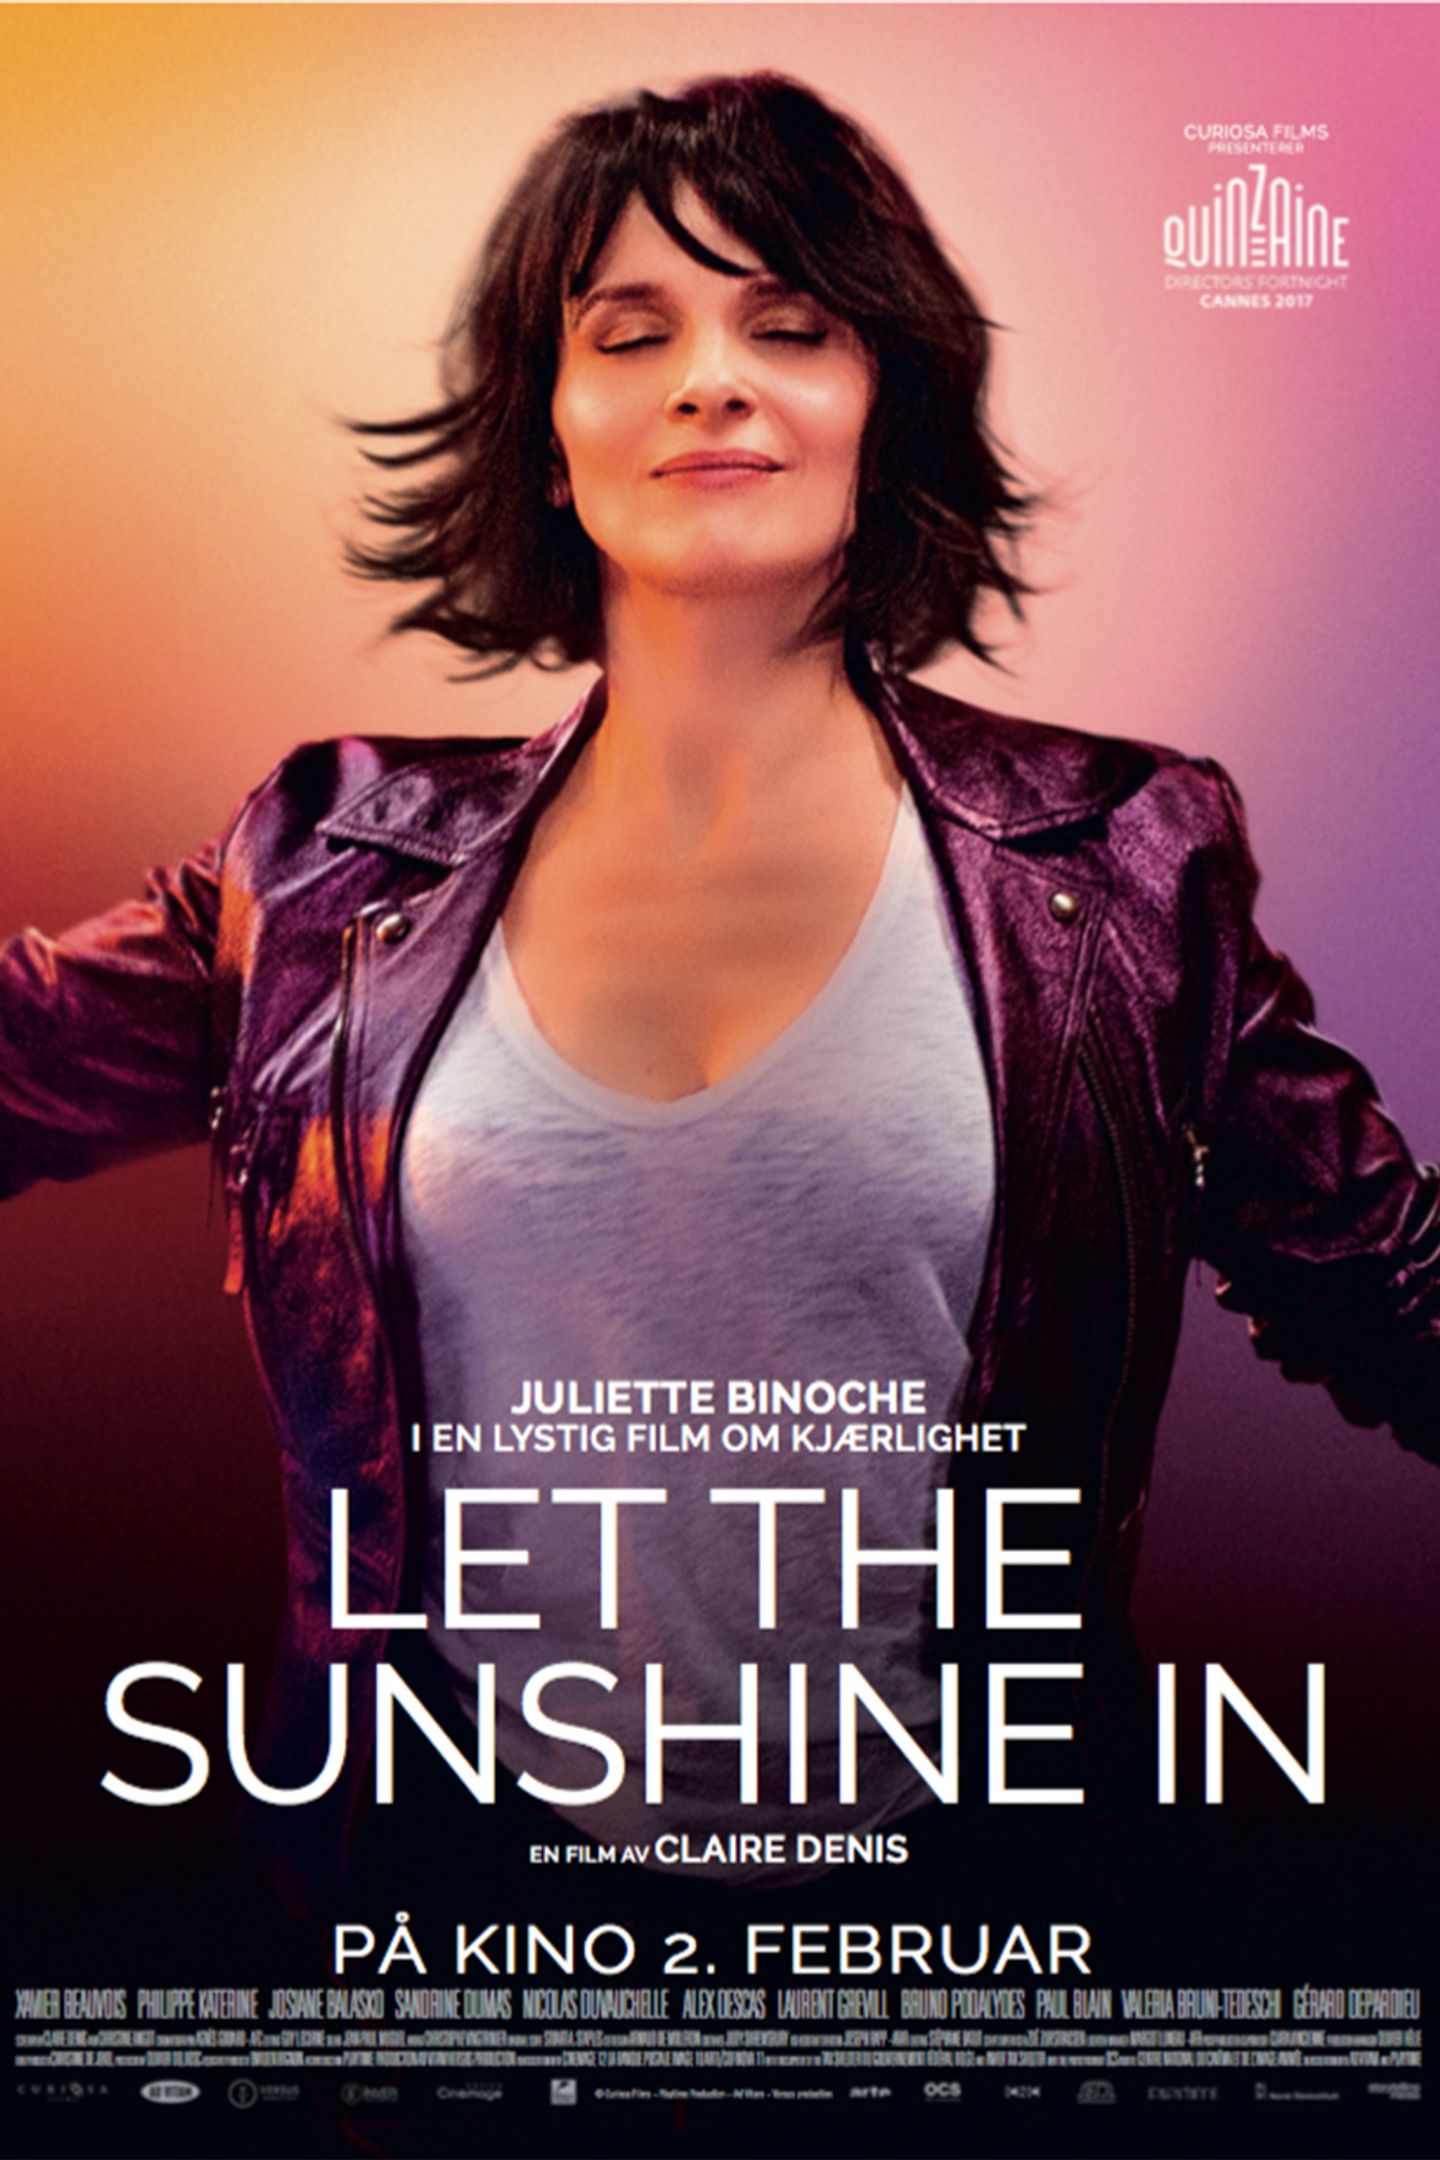 Plakat for 'Let the Sunshine In'